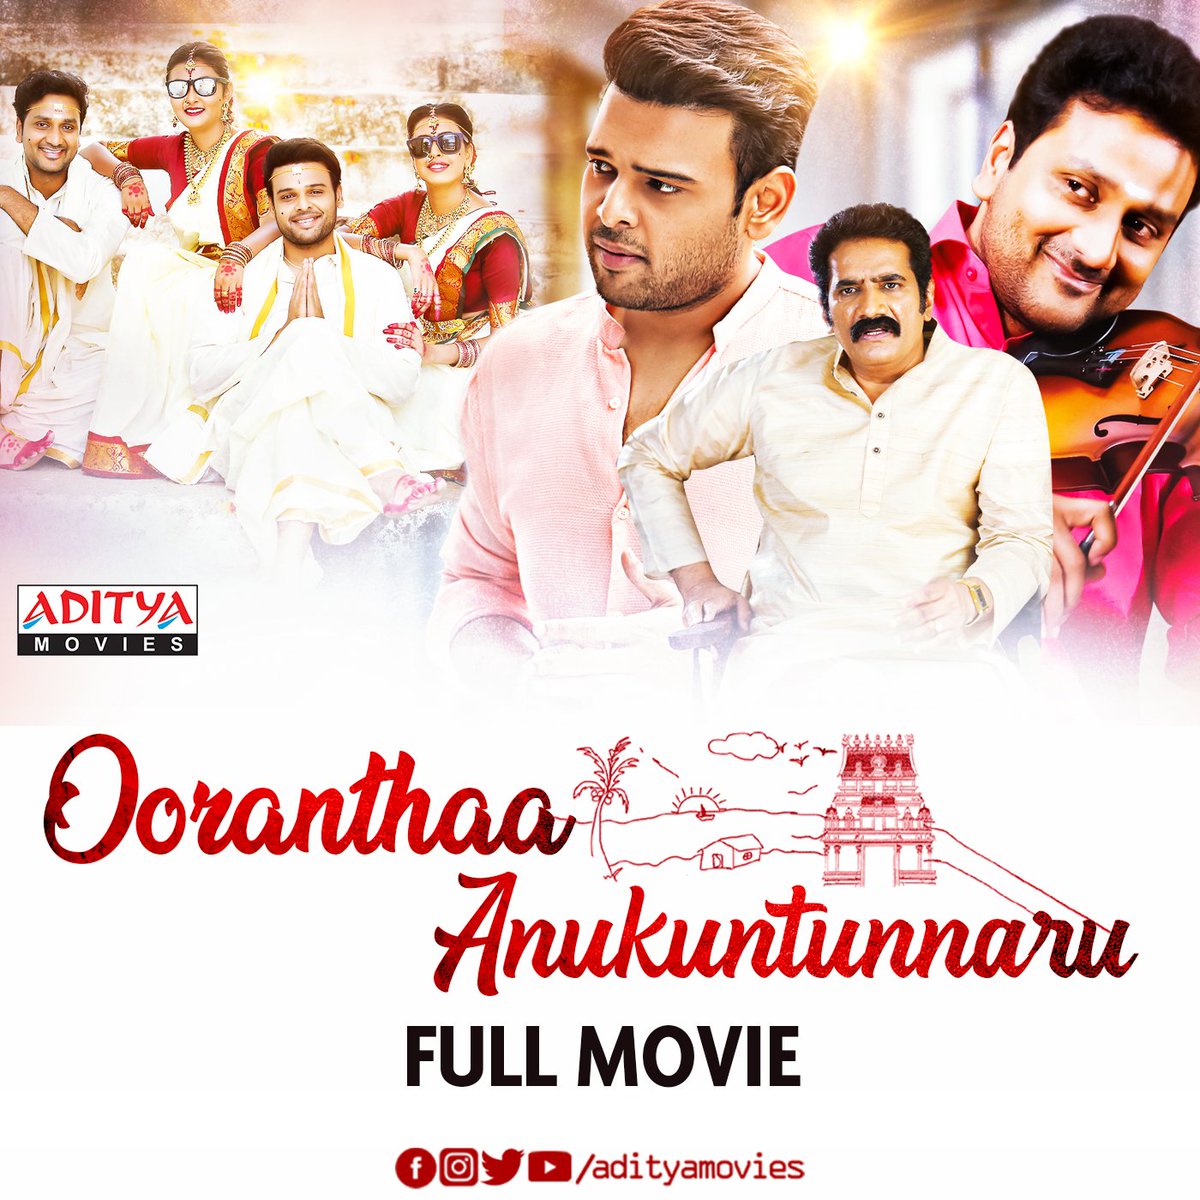 #OoranthaAnukuntunnaru Hindi Dubbed Full Movie Out Now
▶️ youtube.com/watch?v=hwQZIK…

A Complete Drama Family Entertainment

#NaveenVijaykrishna #MeghaChaudhary #SophiyaSingh #SrinivasAvasarala #BalajiSanala #AdityaMovies